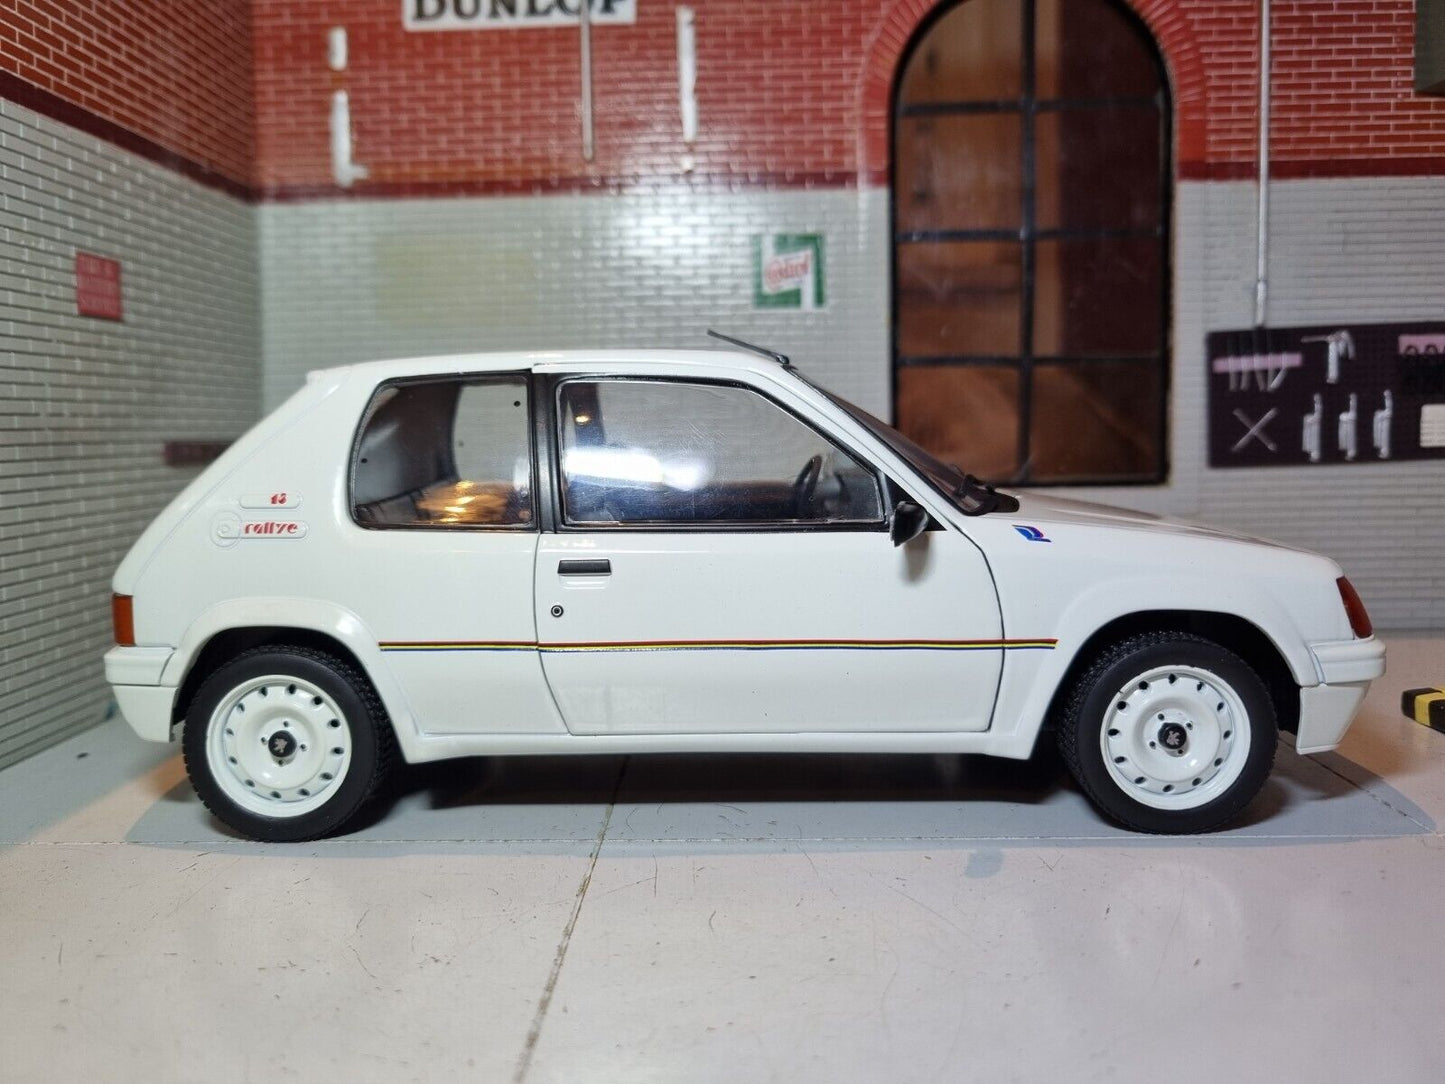 Peugeot Mk1 1988 205 Rallye S1801701 Solido 1:18